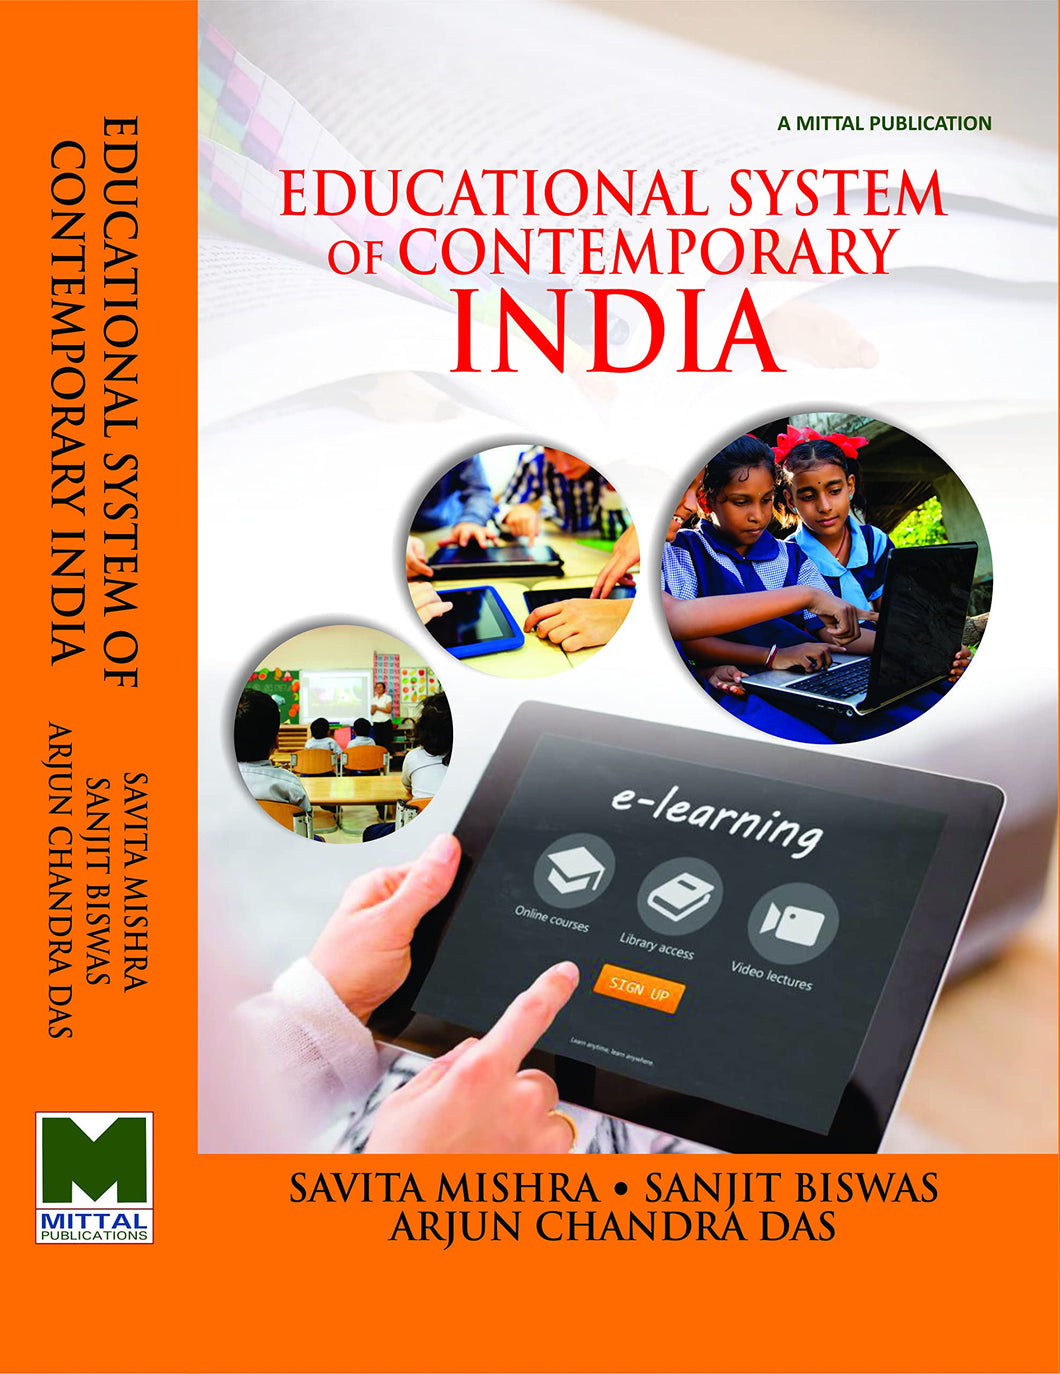 Educational System of Contemporary India by Savita Misha, Sanjit Biswas and Arjun Chandra Das